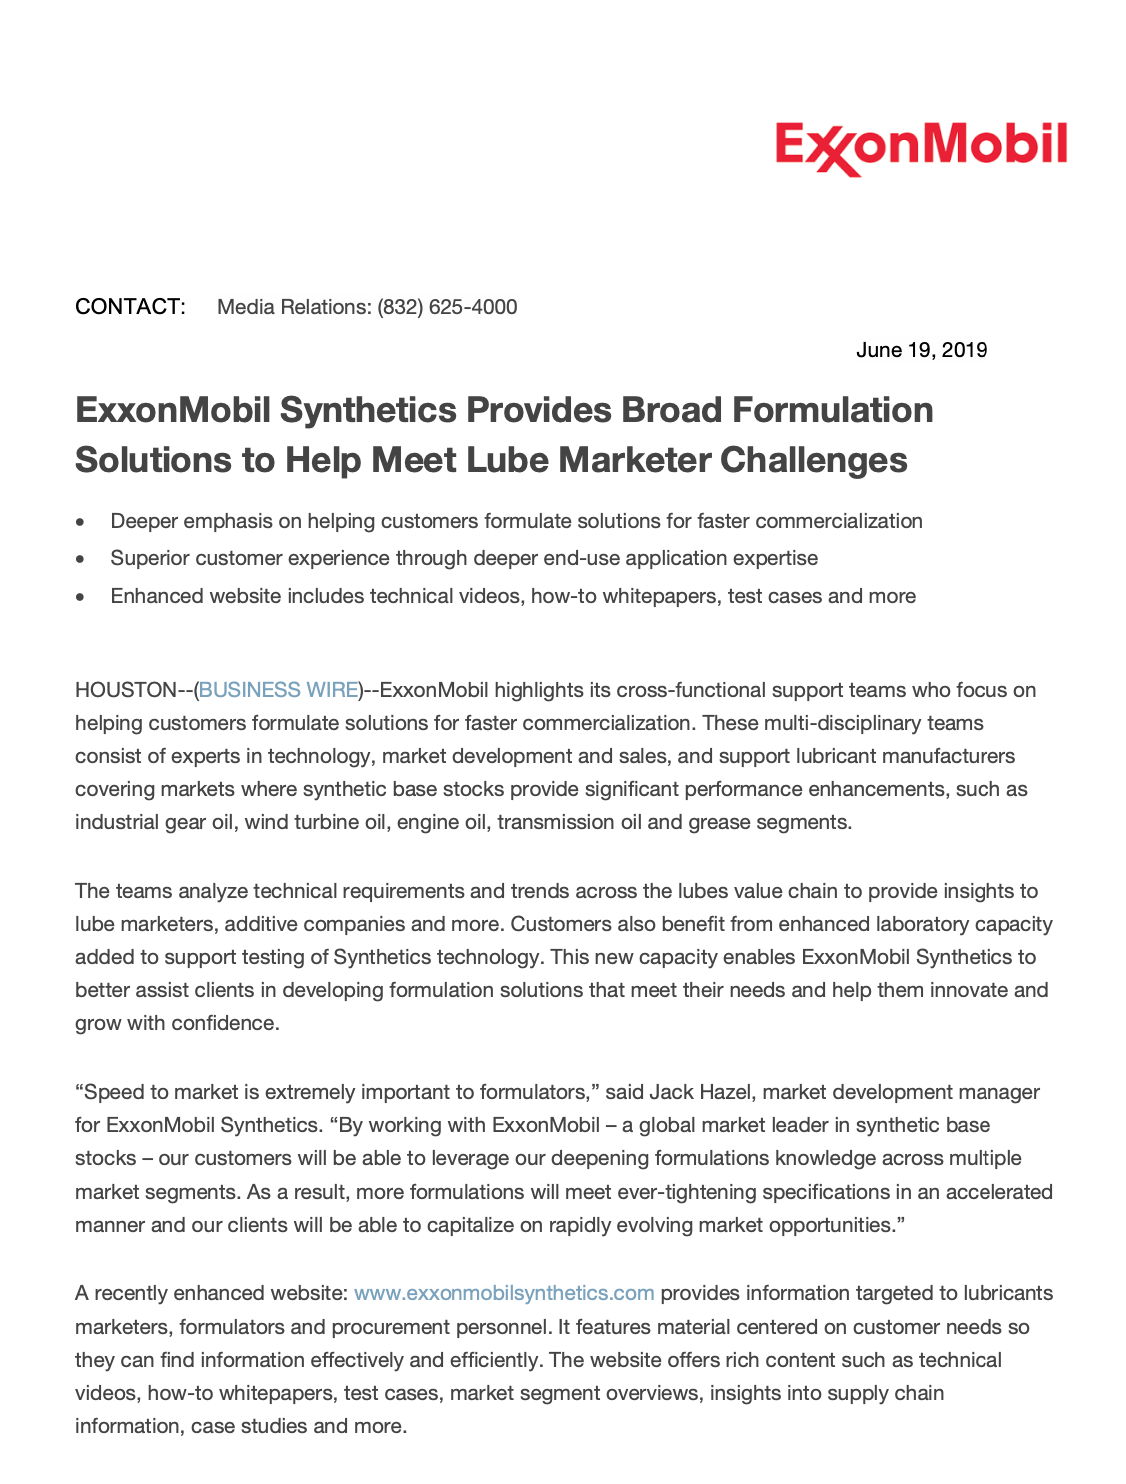 ExxonMobil press release